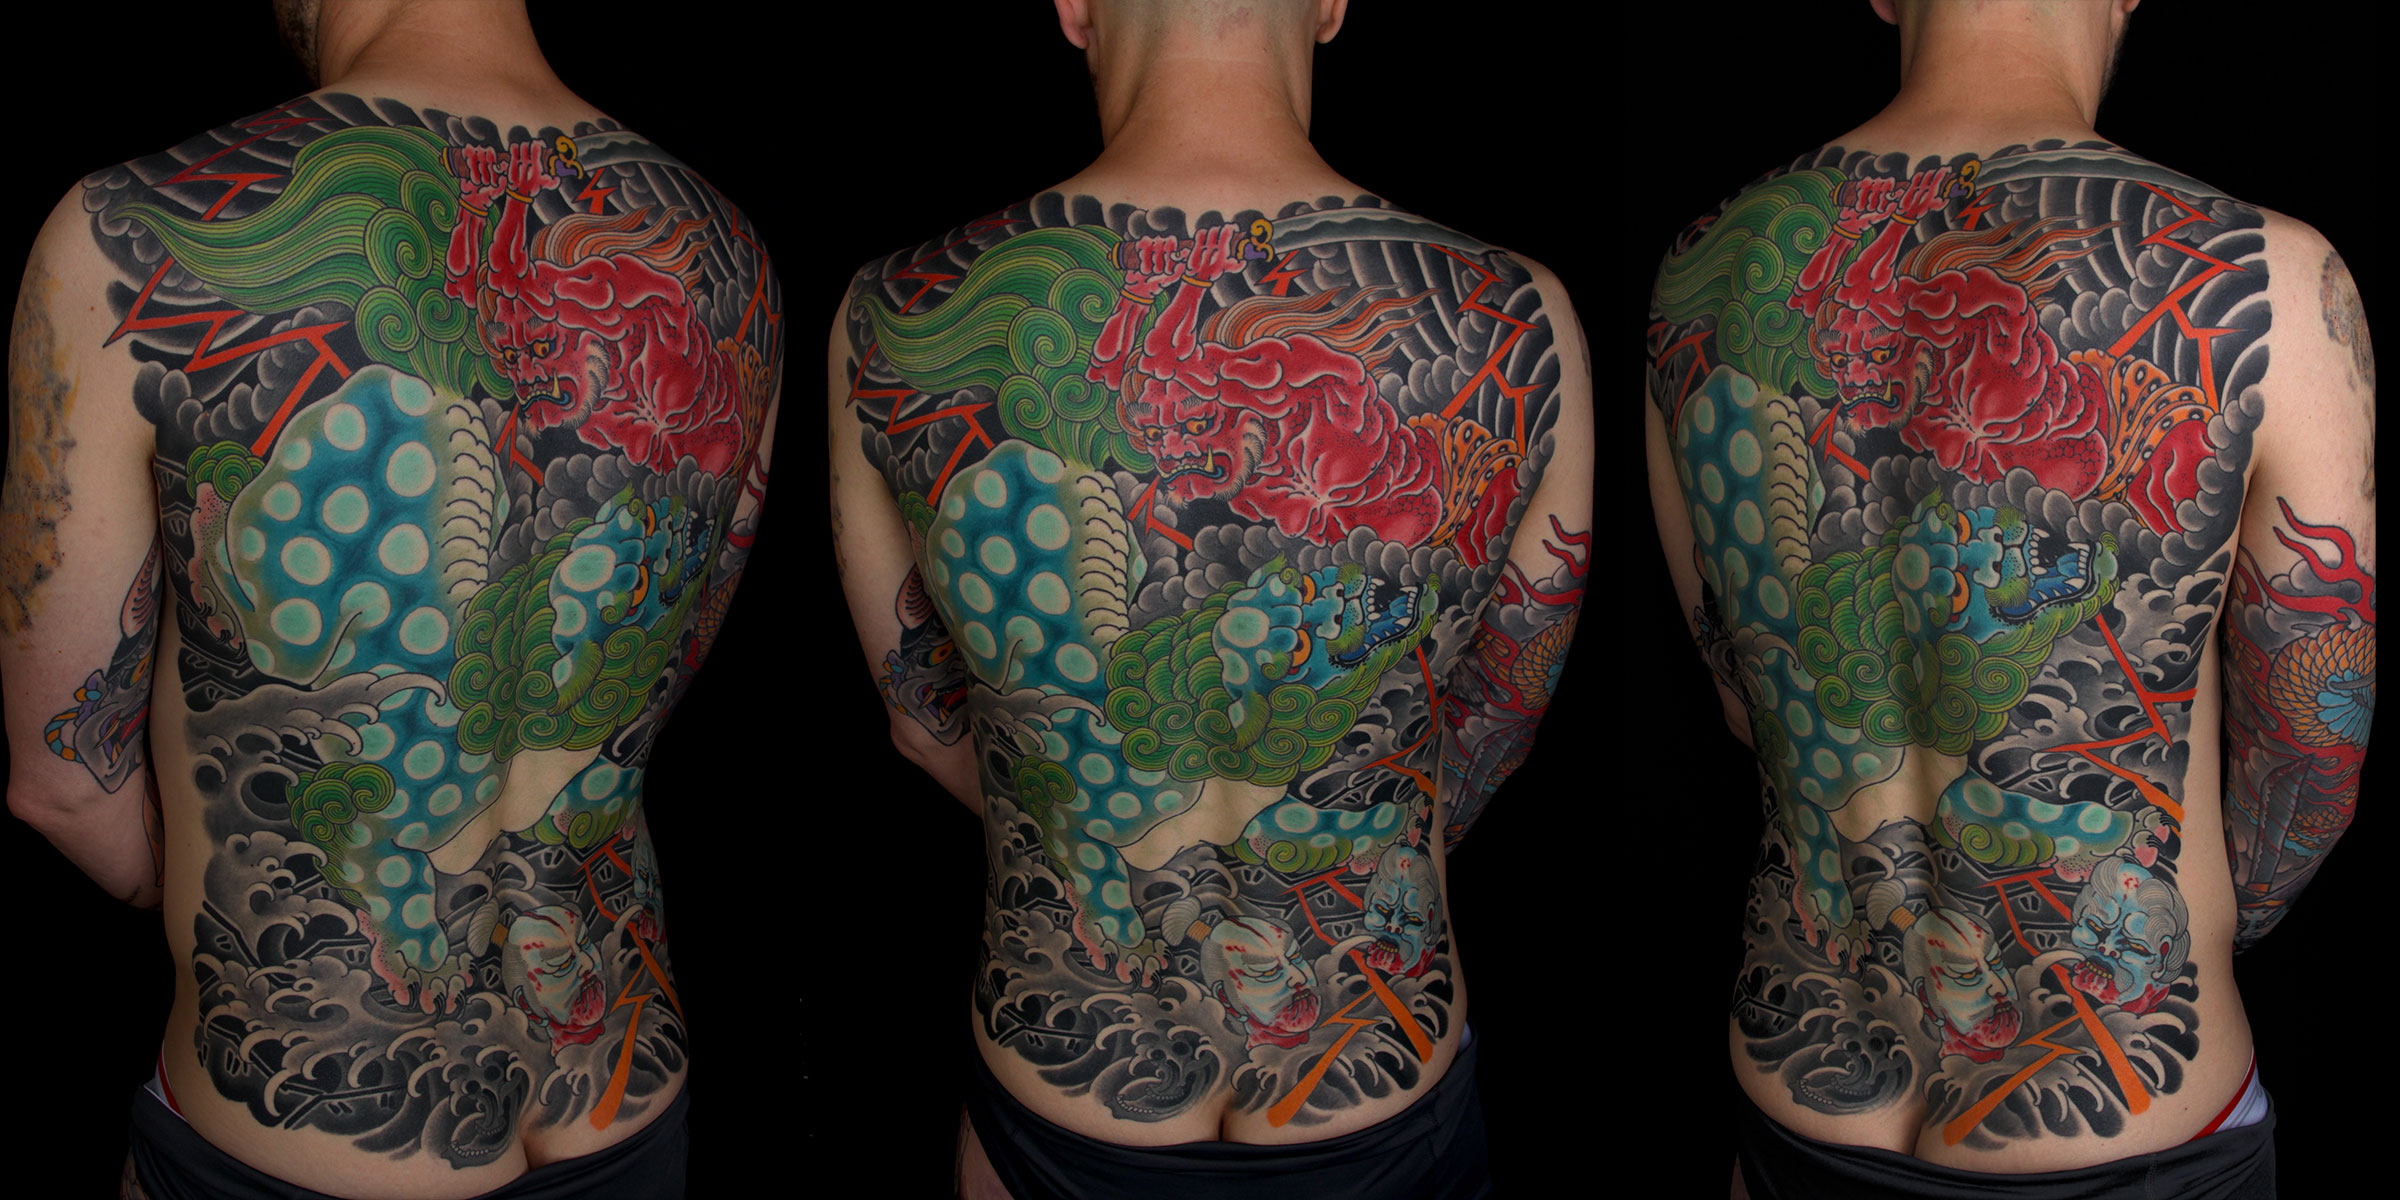 Mike Rubendall: Owner and Tattoo Artist - Kings Avenue Tattoo